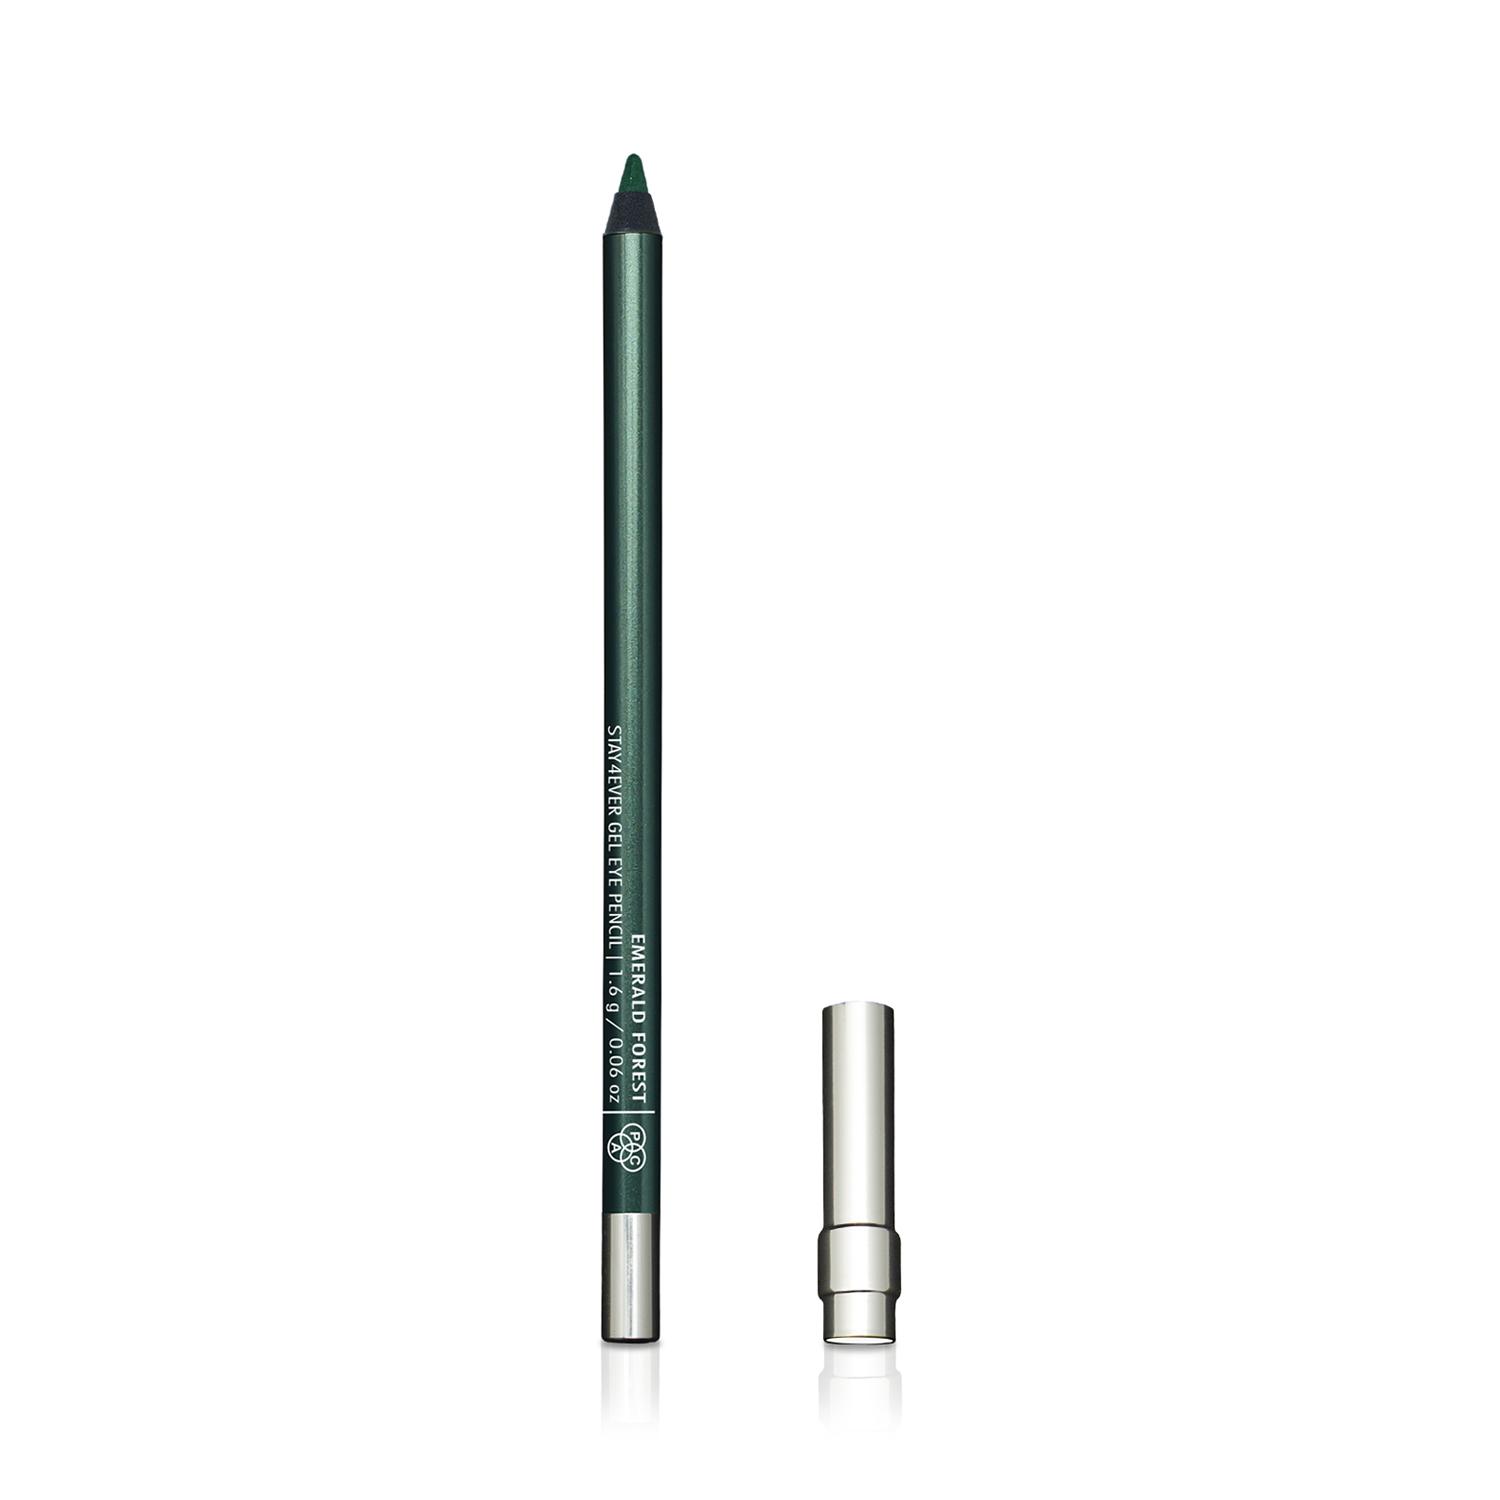 PAC Stay4Ever Gel Eye Pencil - Emerald Forest (1.6g)